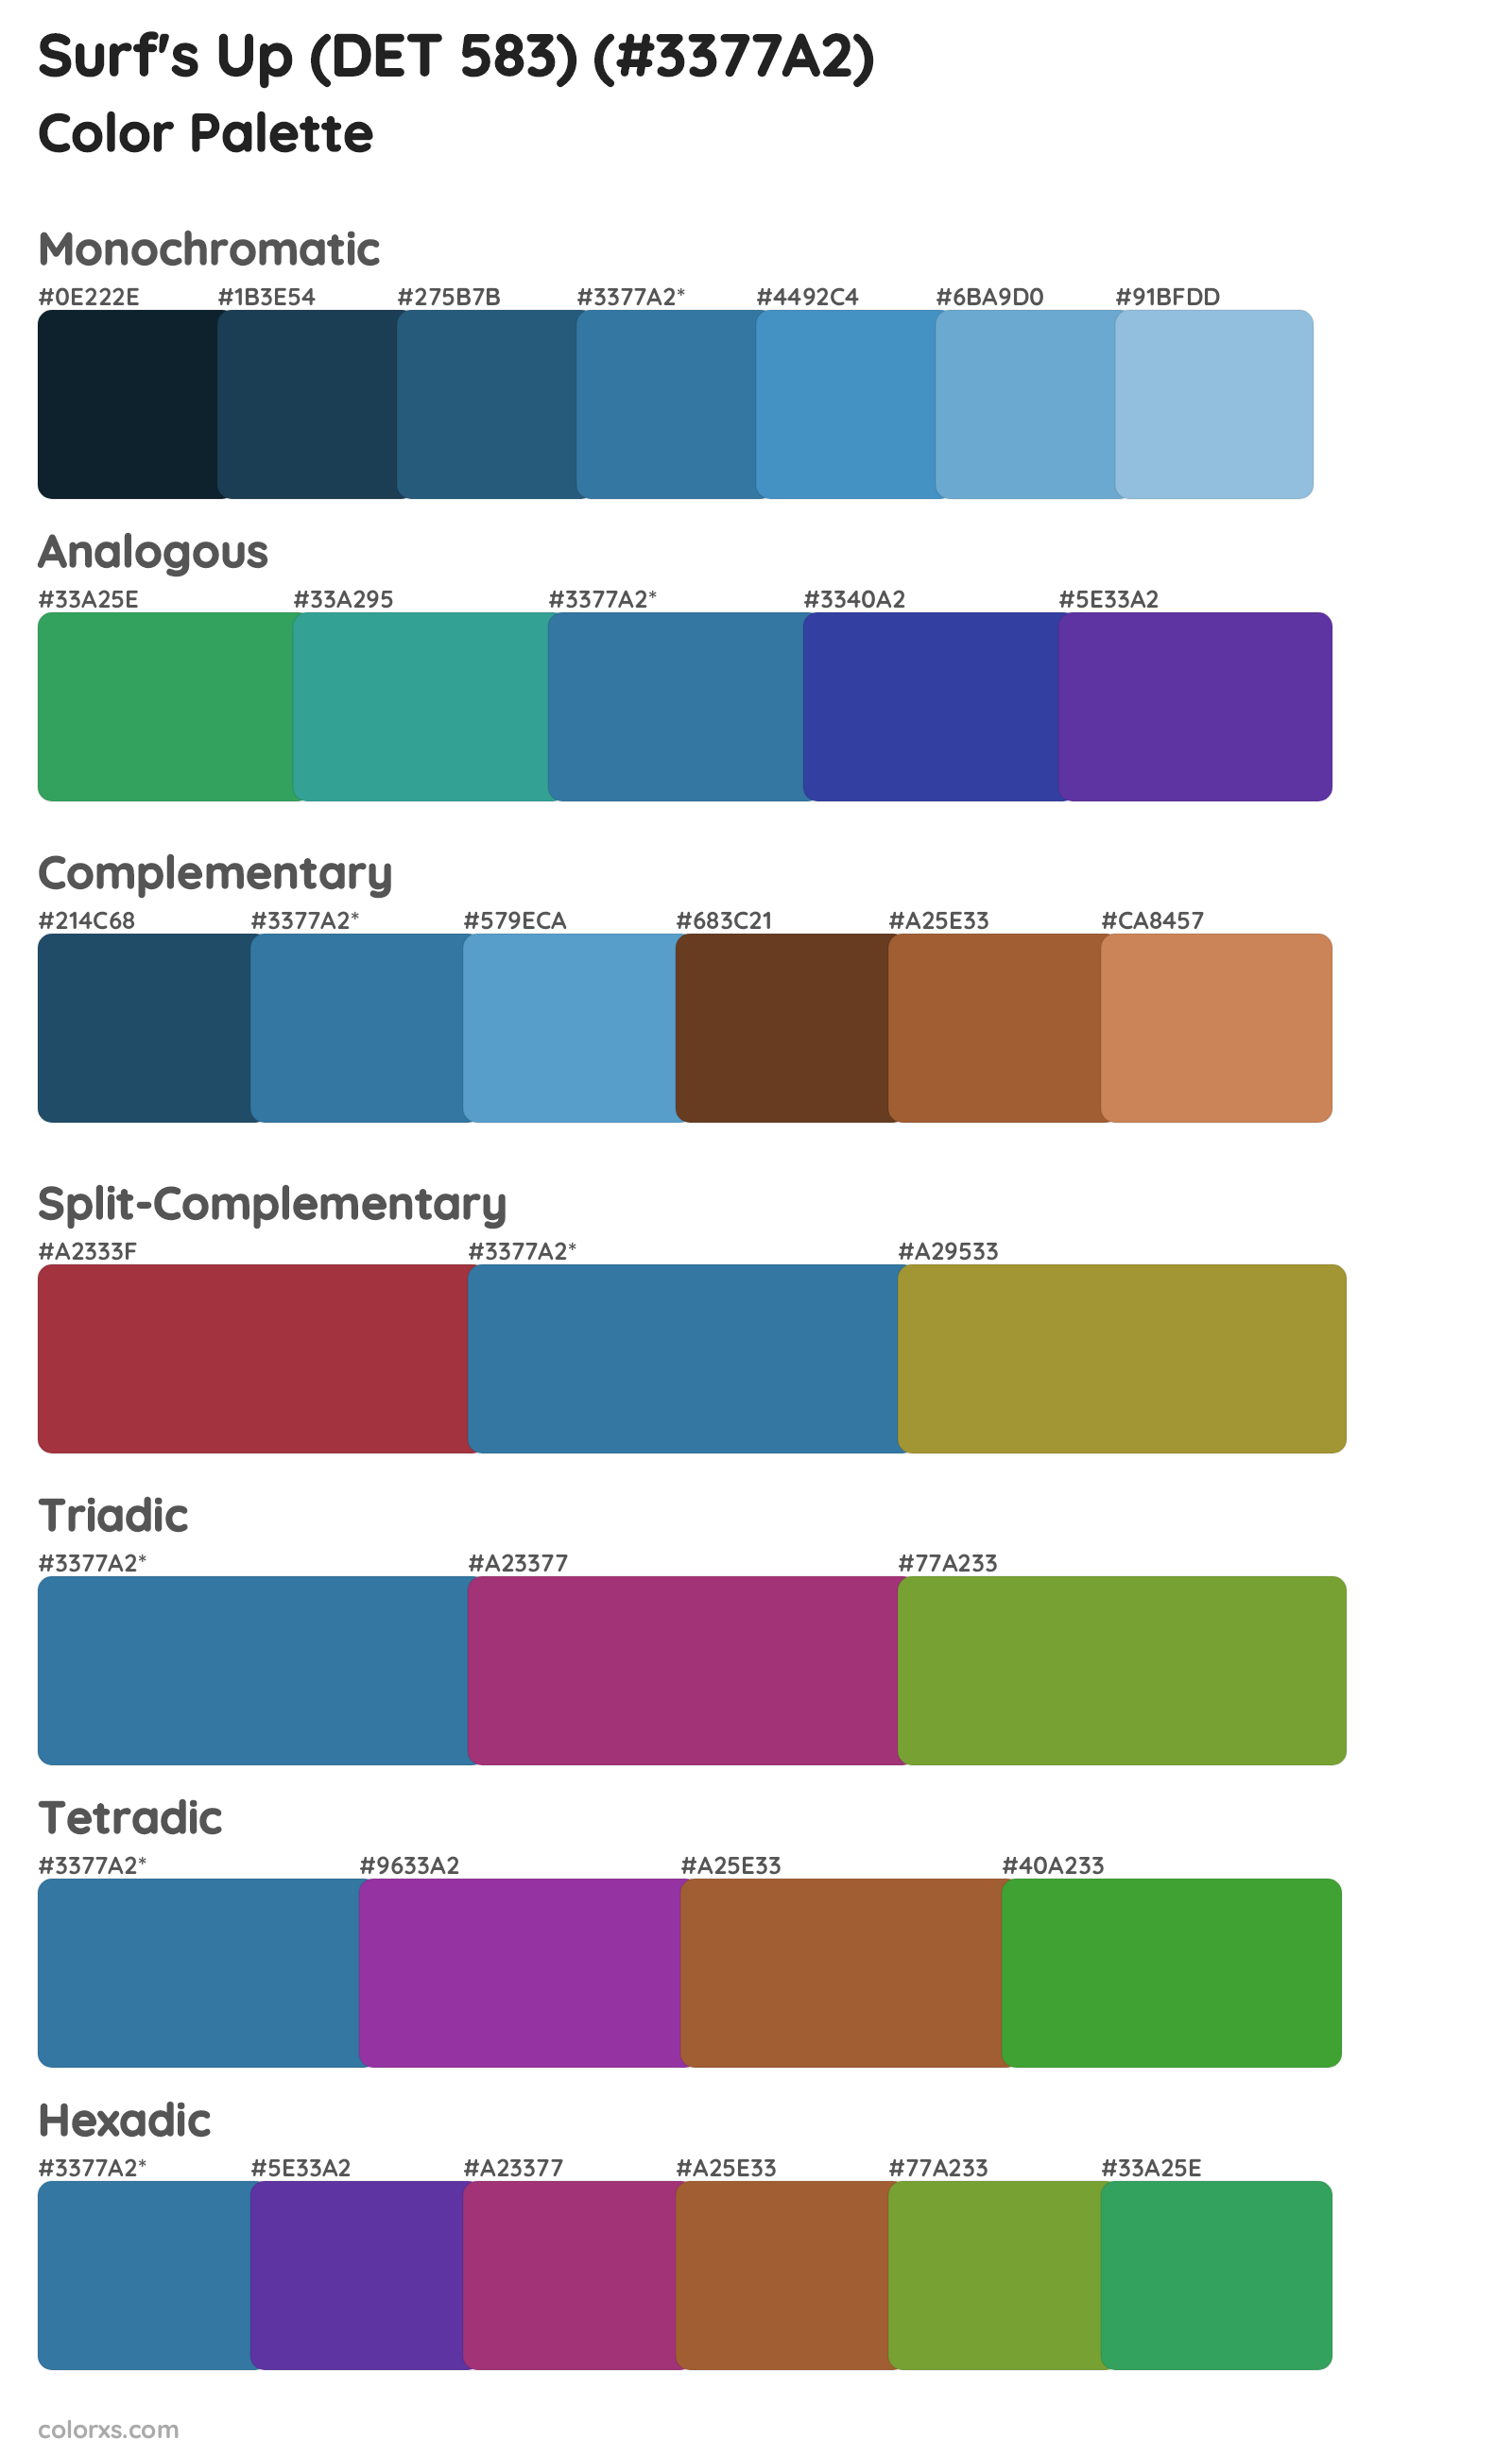 Surf's Up (DET 583) Color Scheme Palettes